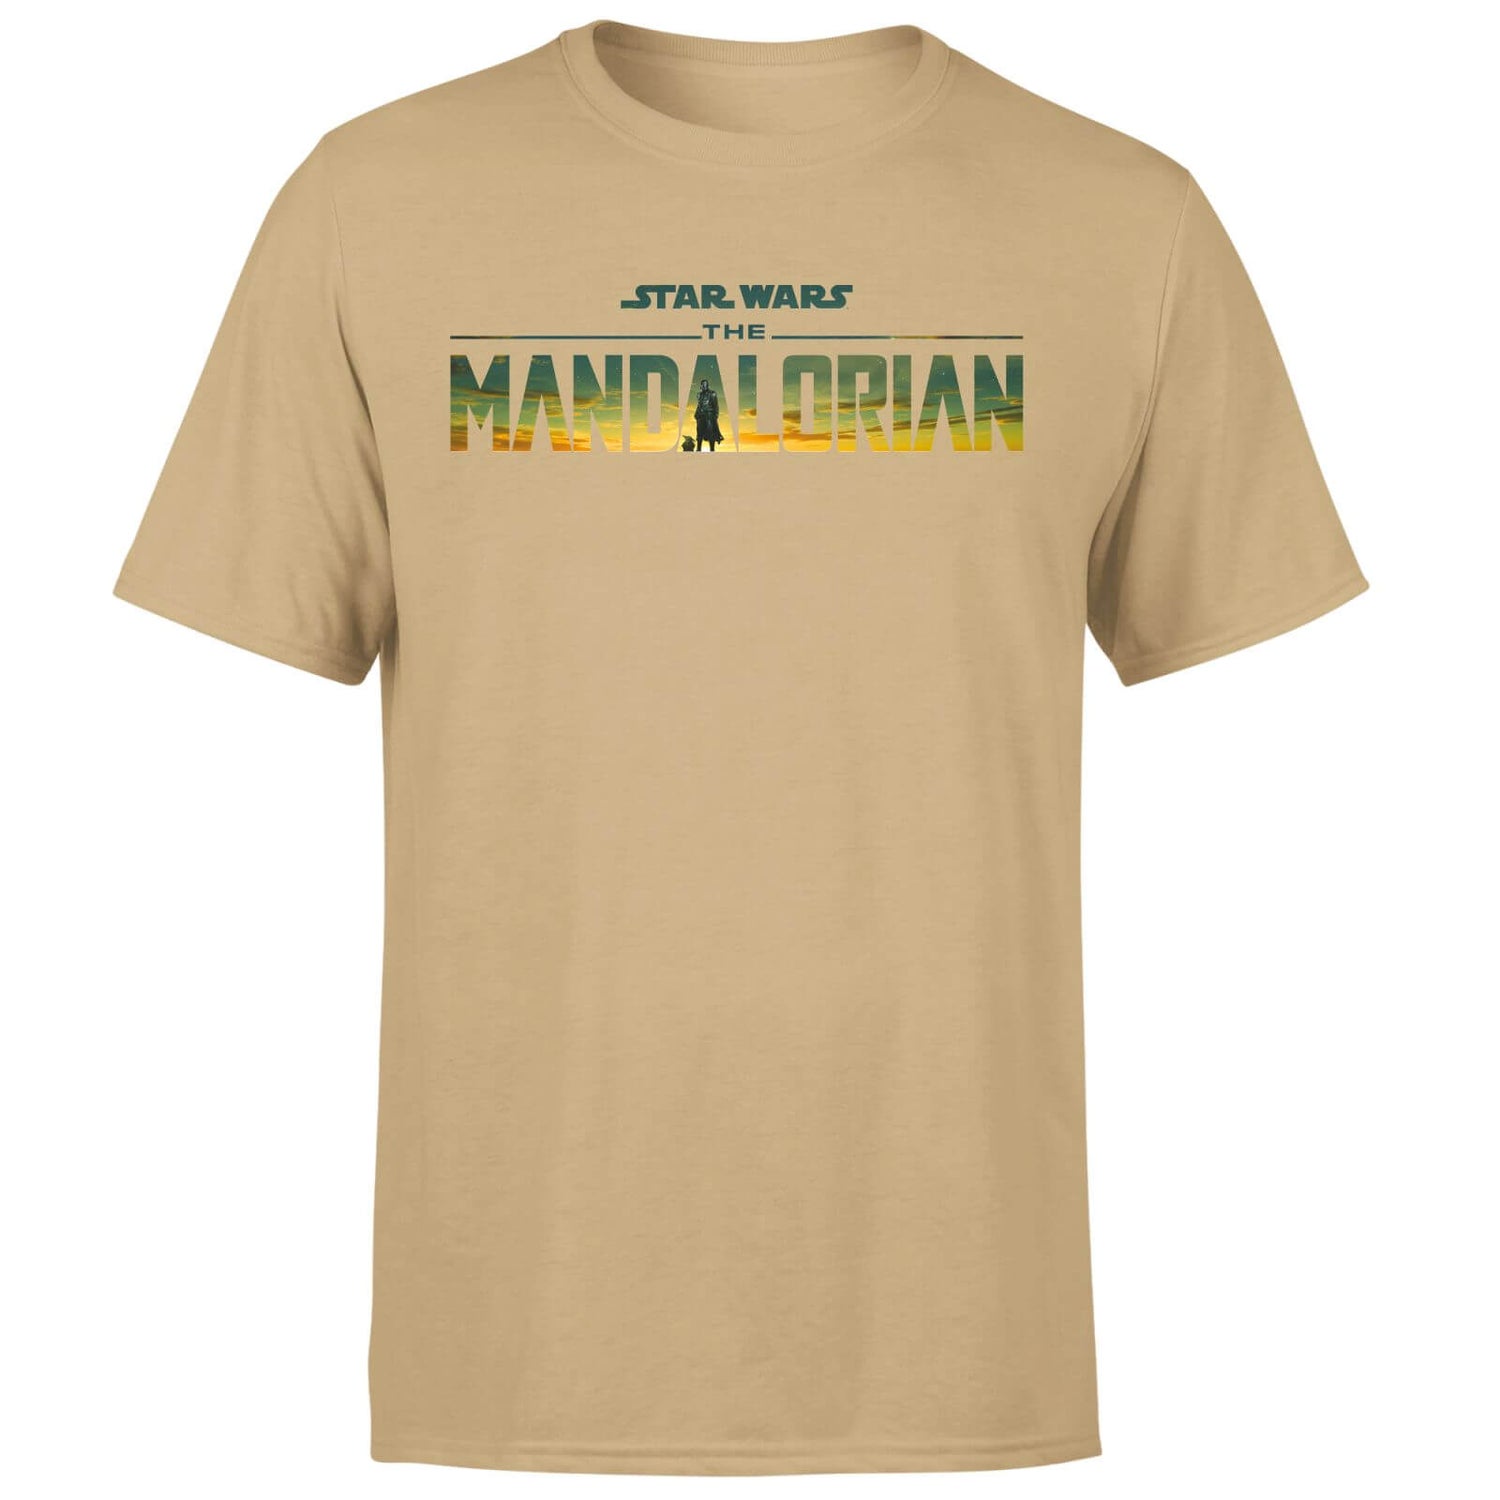 Star Wars The Mandalorian Sunset Logo Men's T-Shirt - Tan